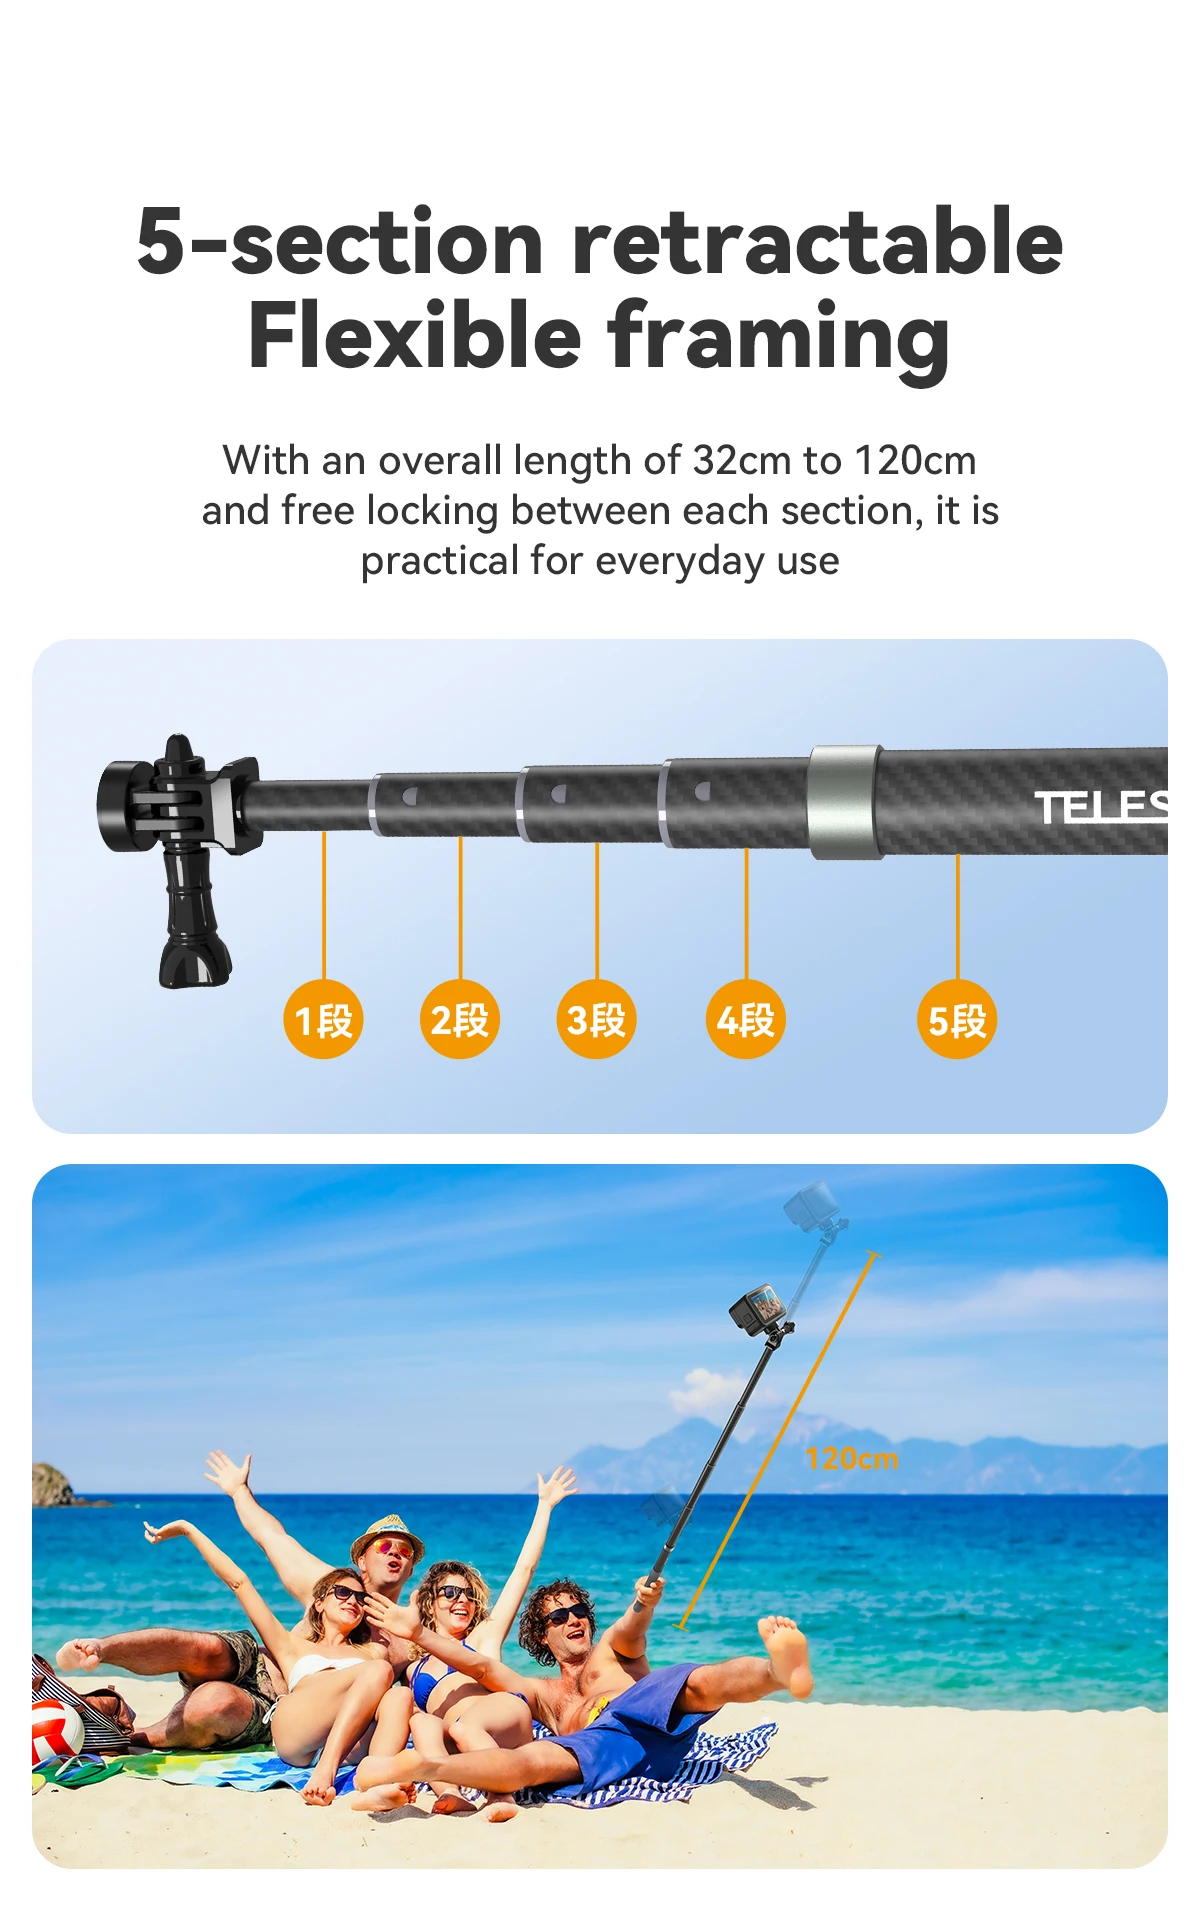 Telesin 1.2M carbon Fiber Selfie Stick Eccentric Tube Design Suitable for GoPro/Insta360 Action cameras